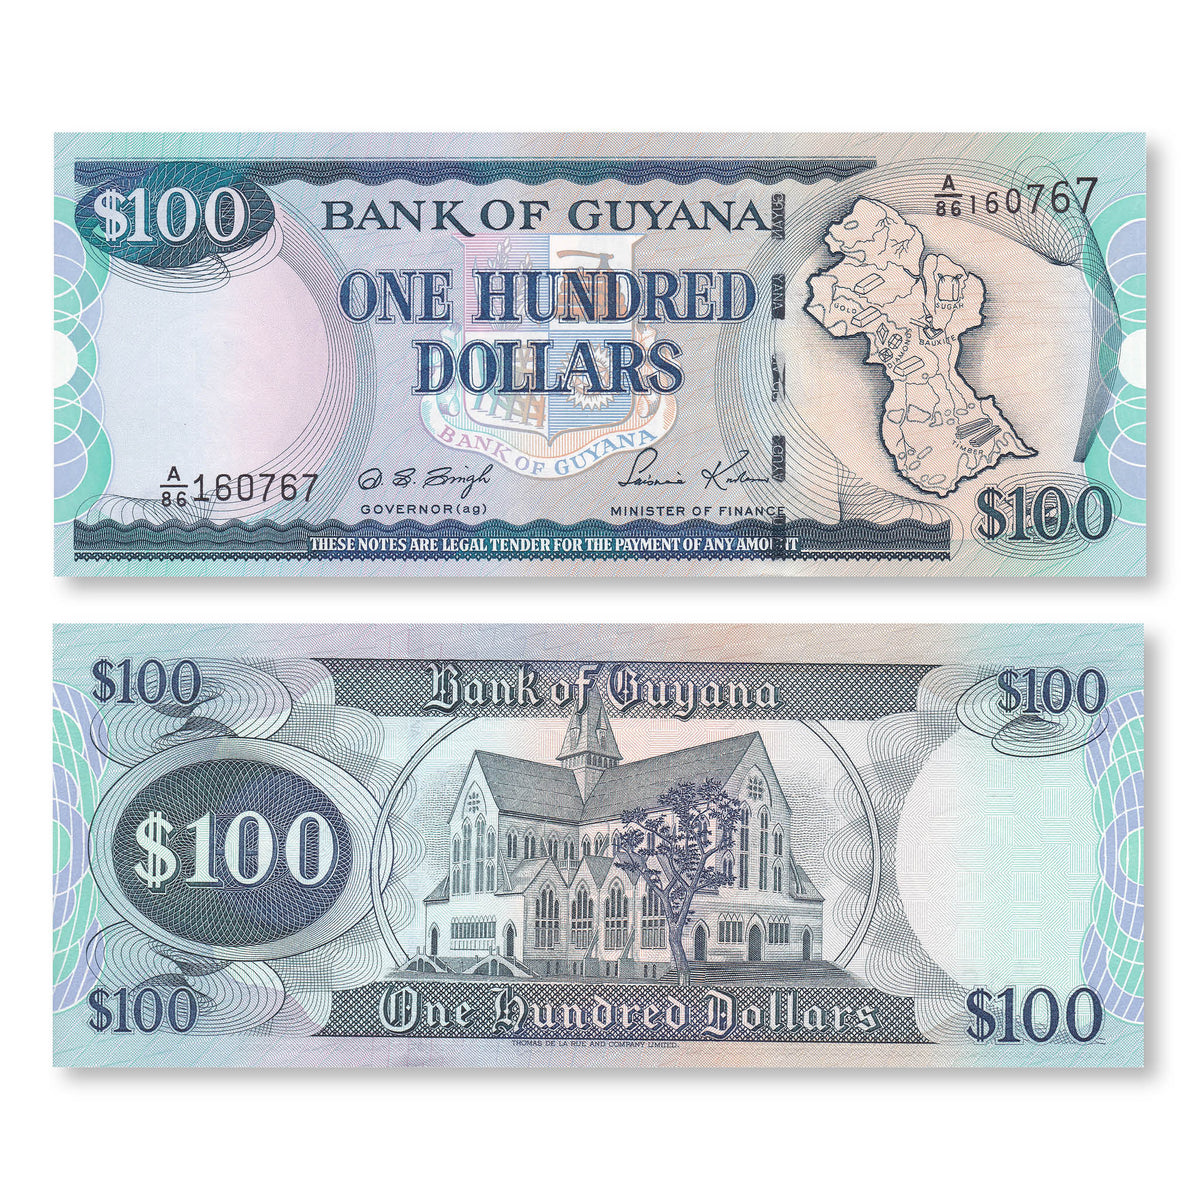 Guyana 100 Dollars, 1998, B109c, P31, UNC - Robert's World Money - World Banknotes